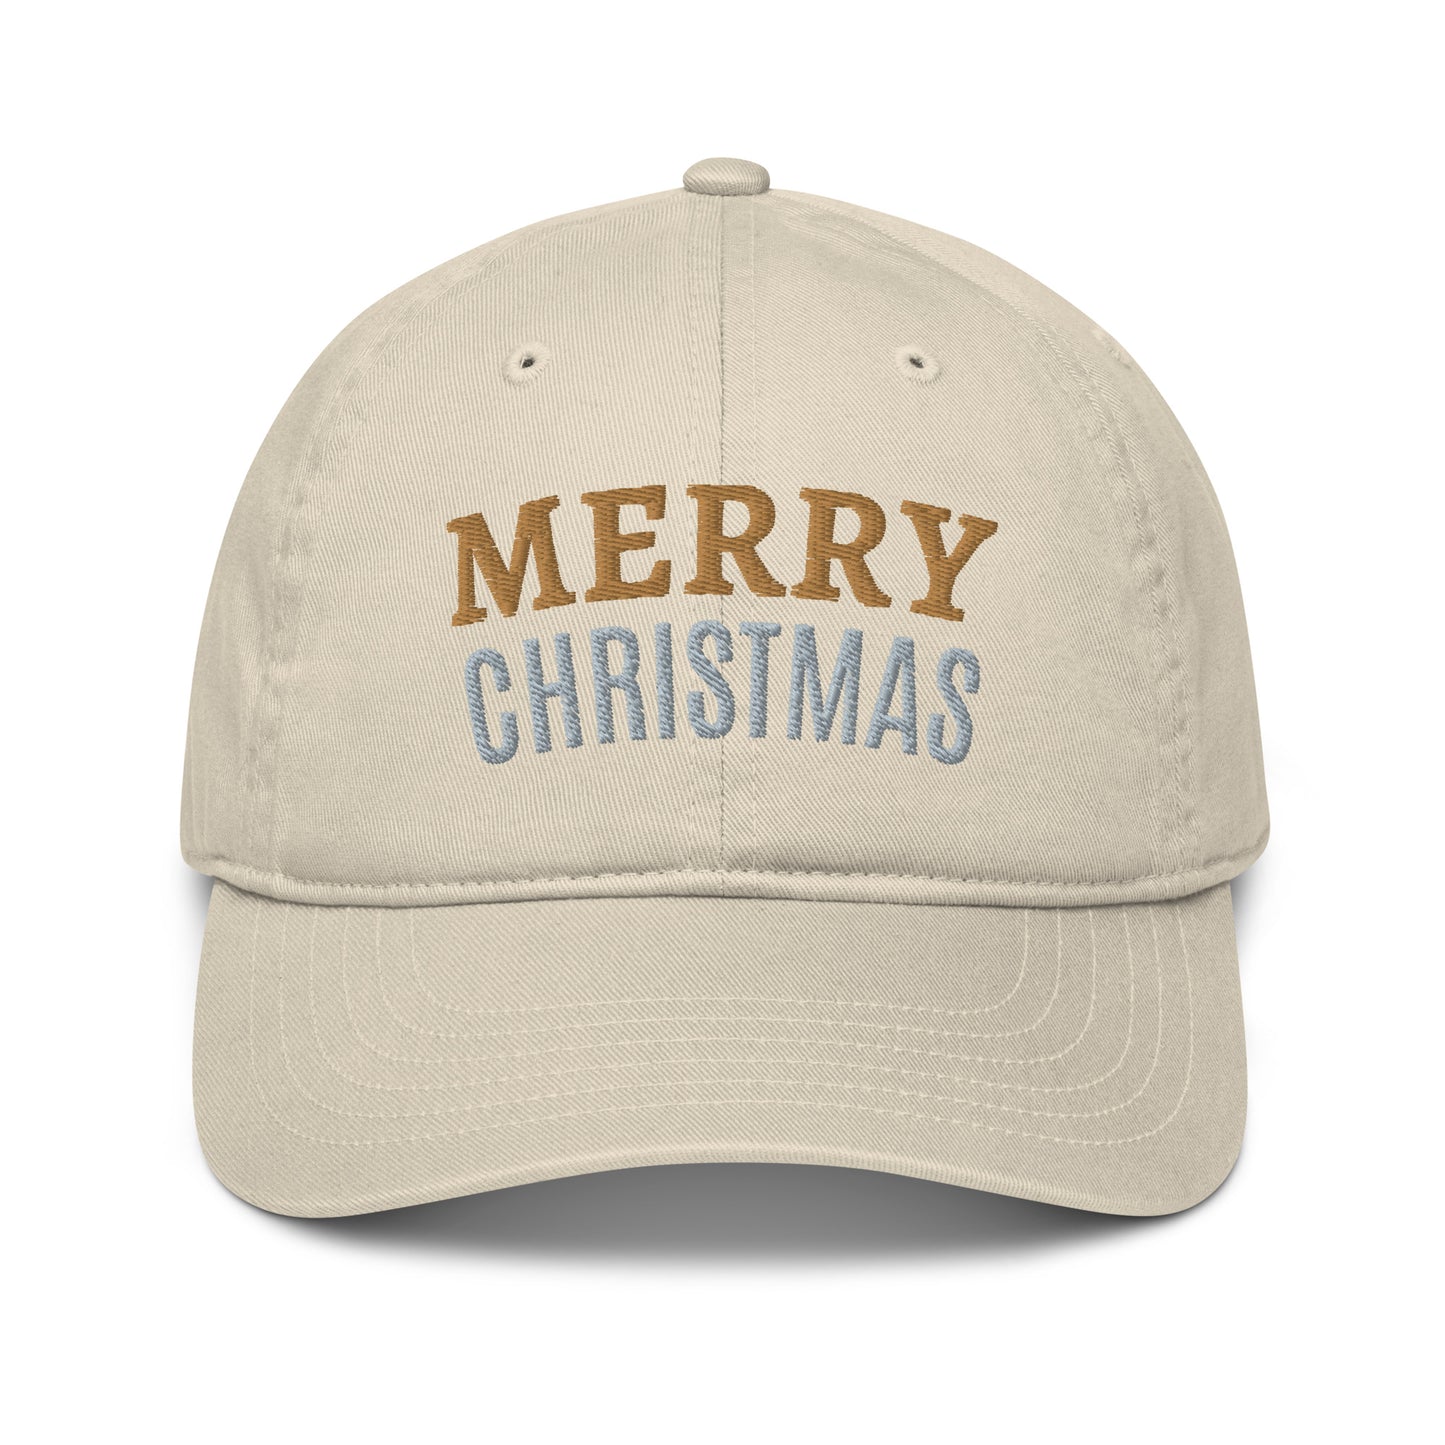 Christmas hat / Sombrero navideño